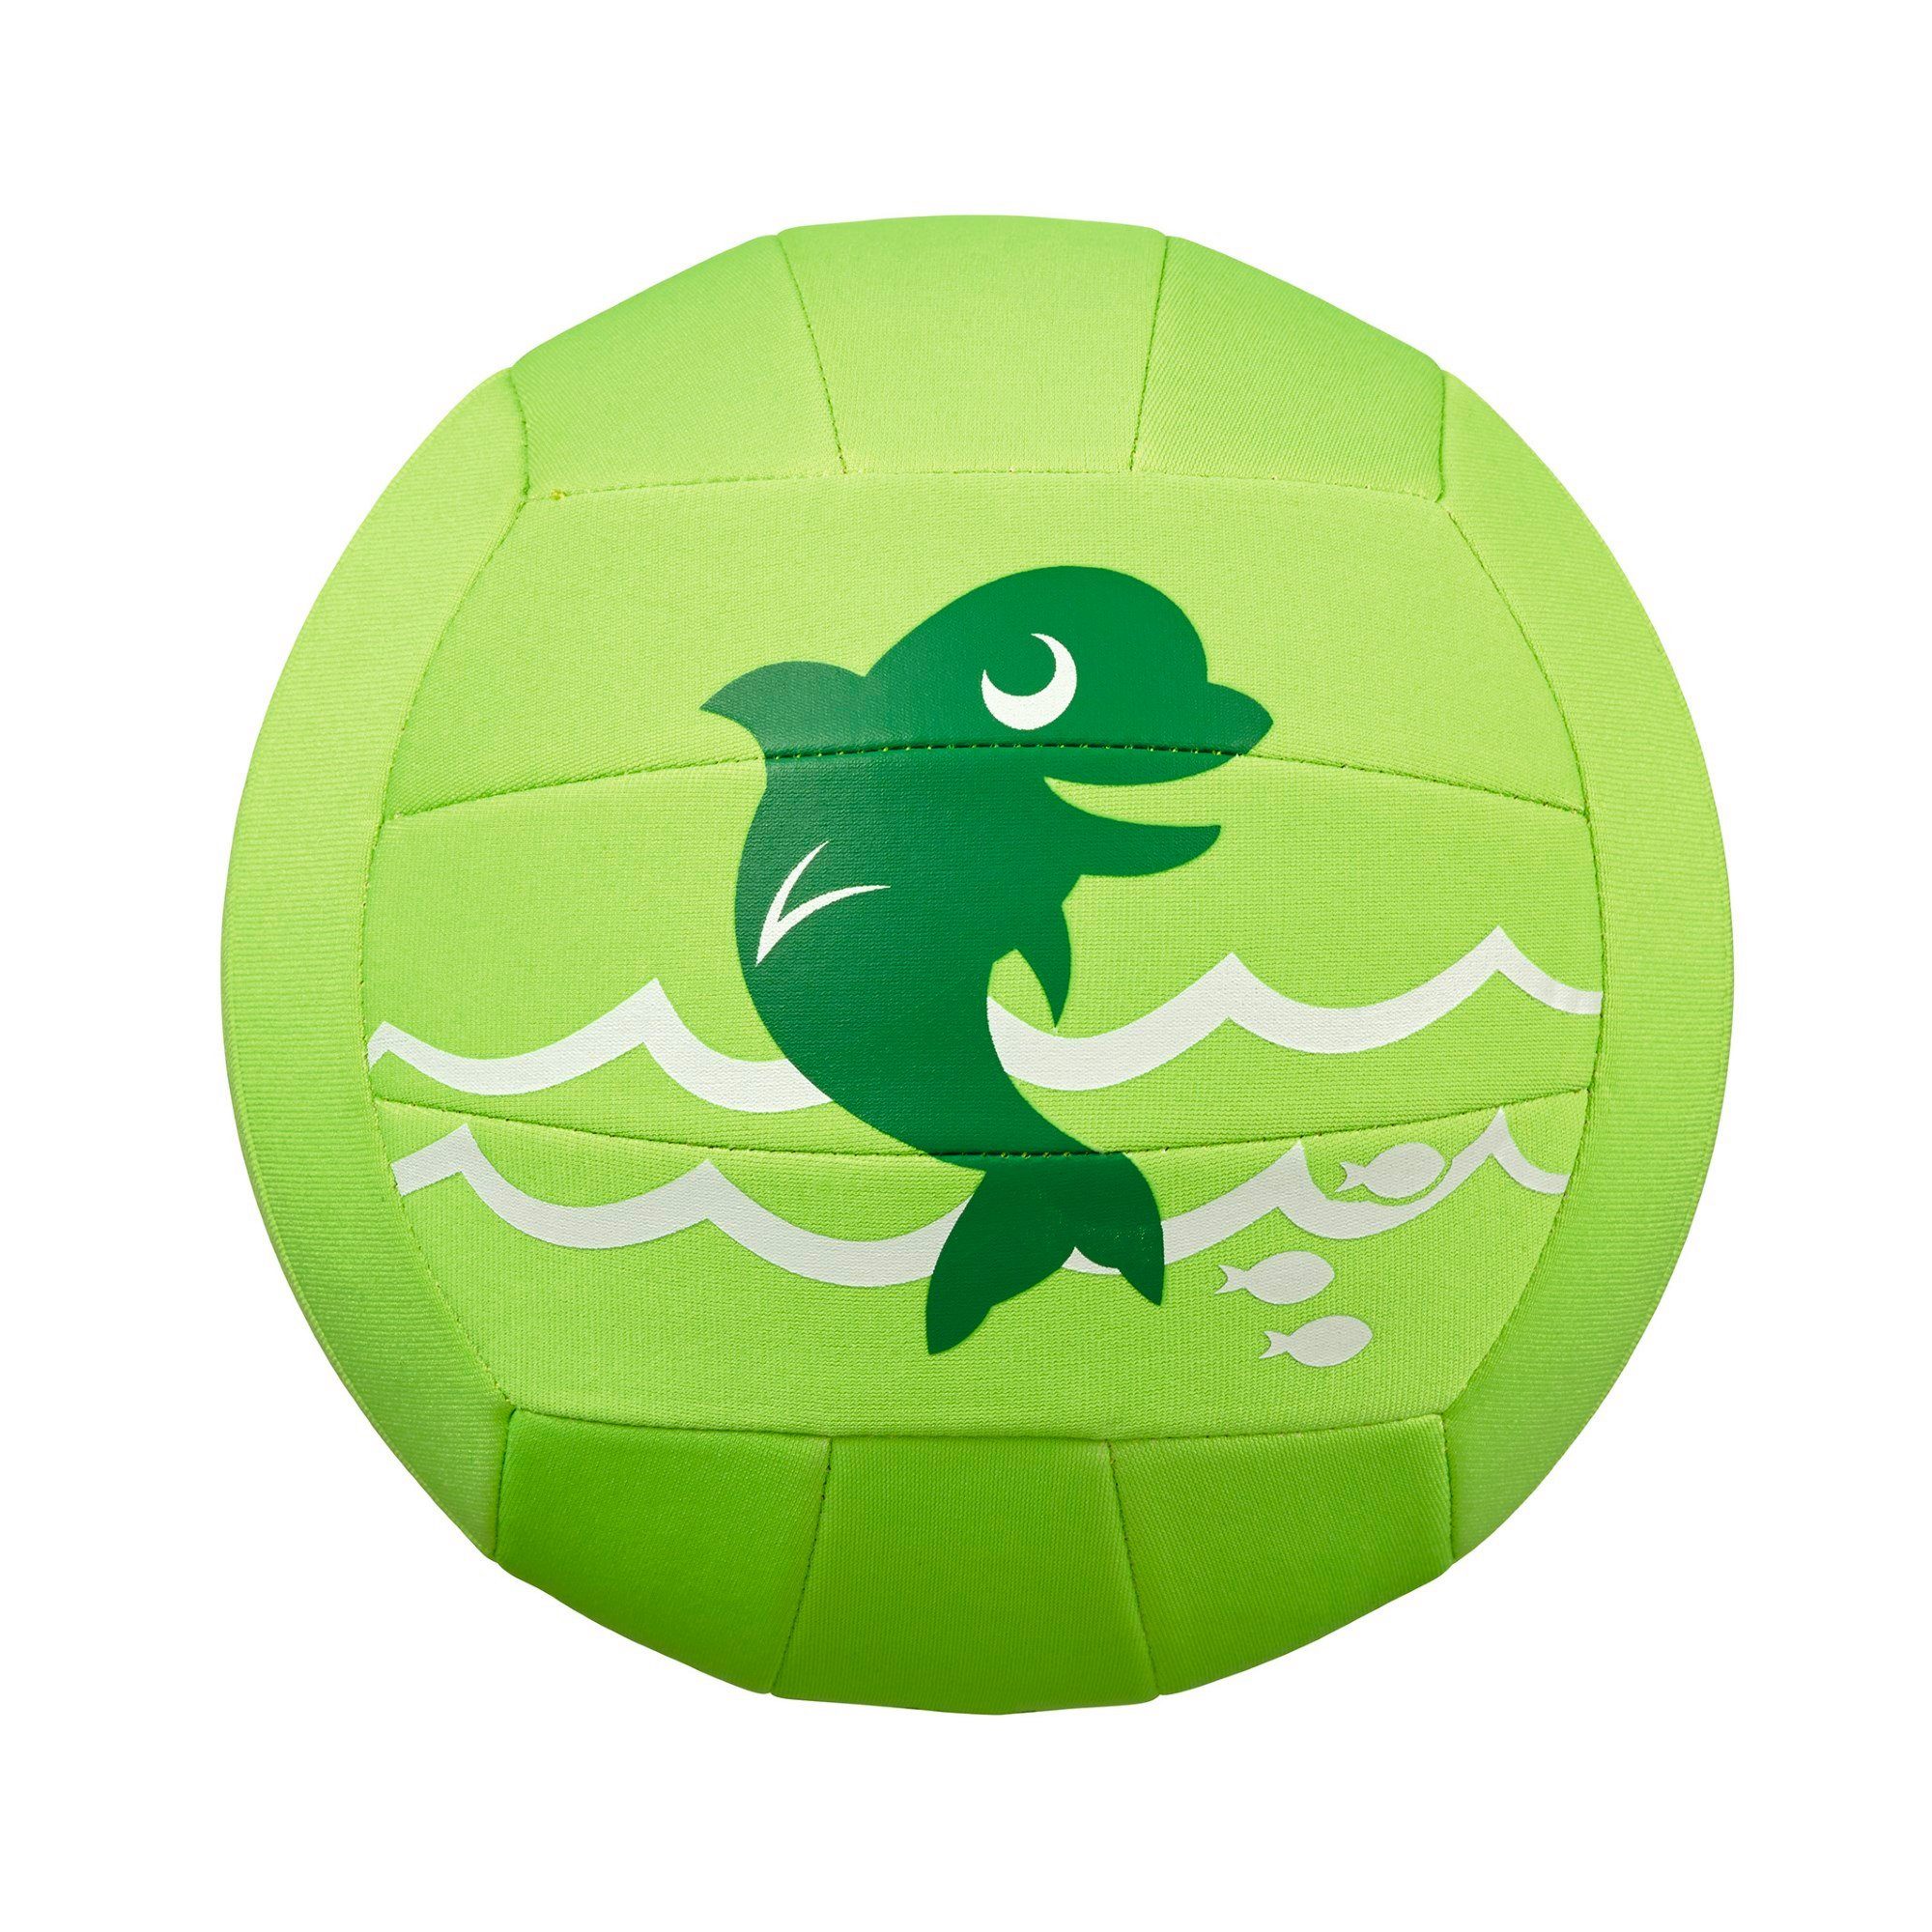 Beco Beermann Spielball BECO SEALIFE Neopren Beach Ball 21cm grün | Spielbälle